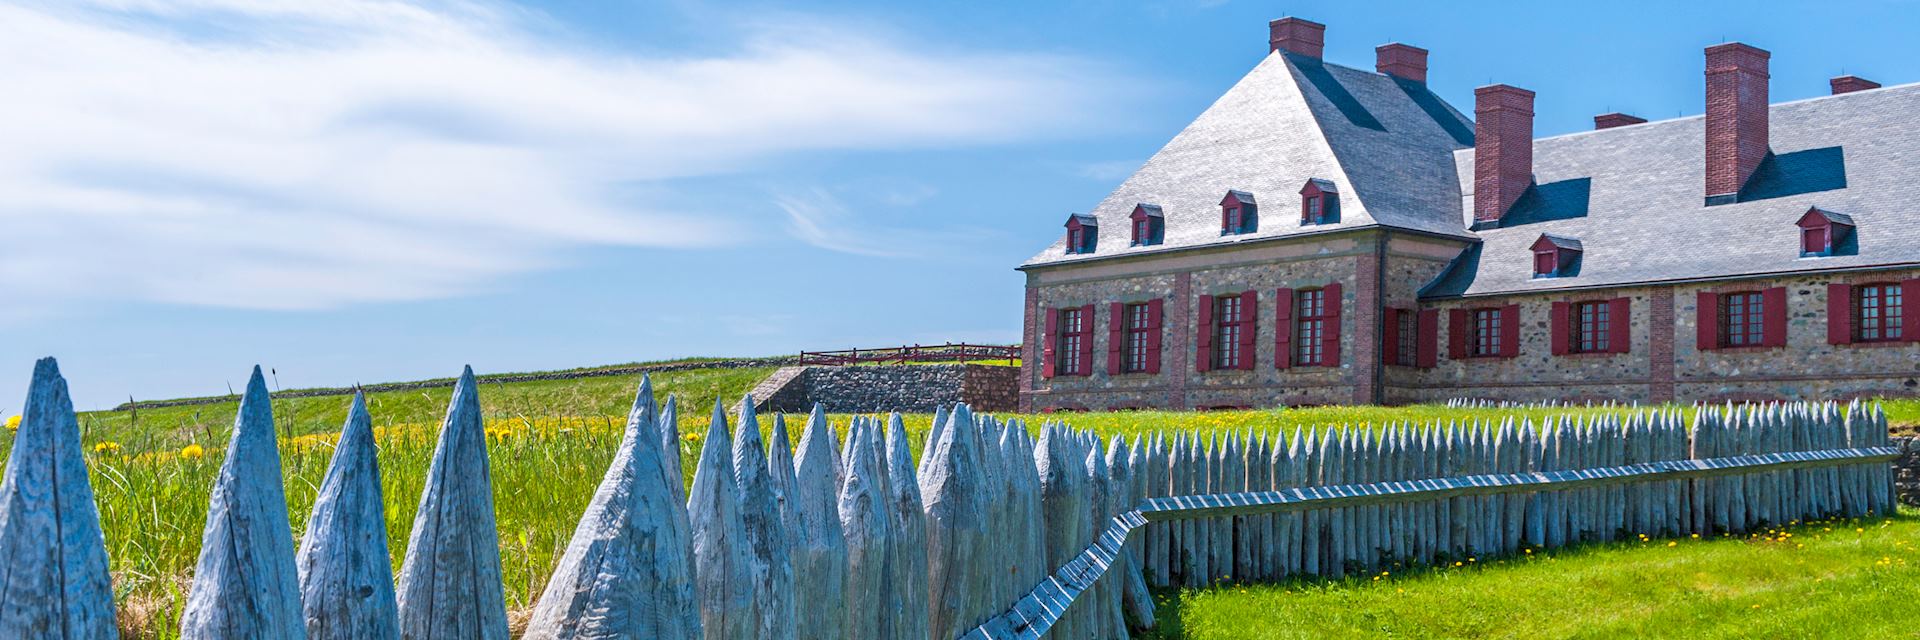 Fortress of Louisbourg, Nova Scotia